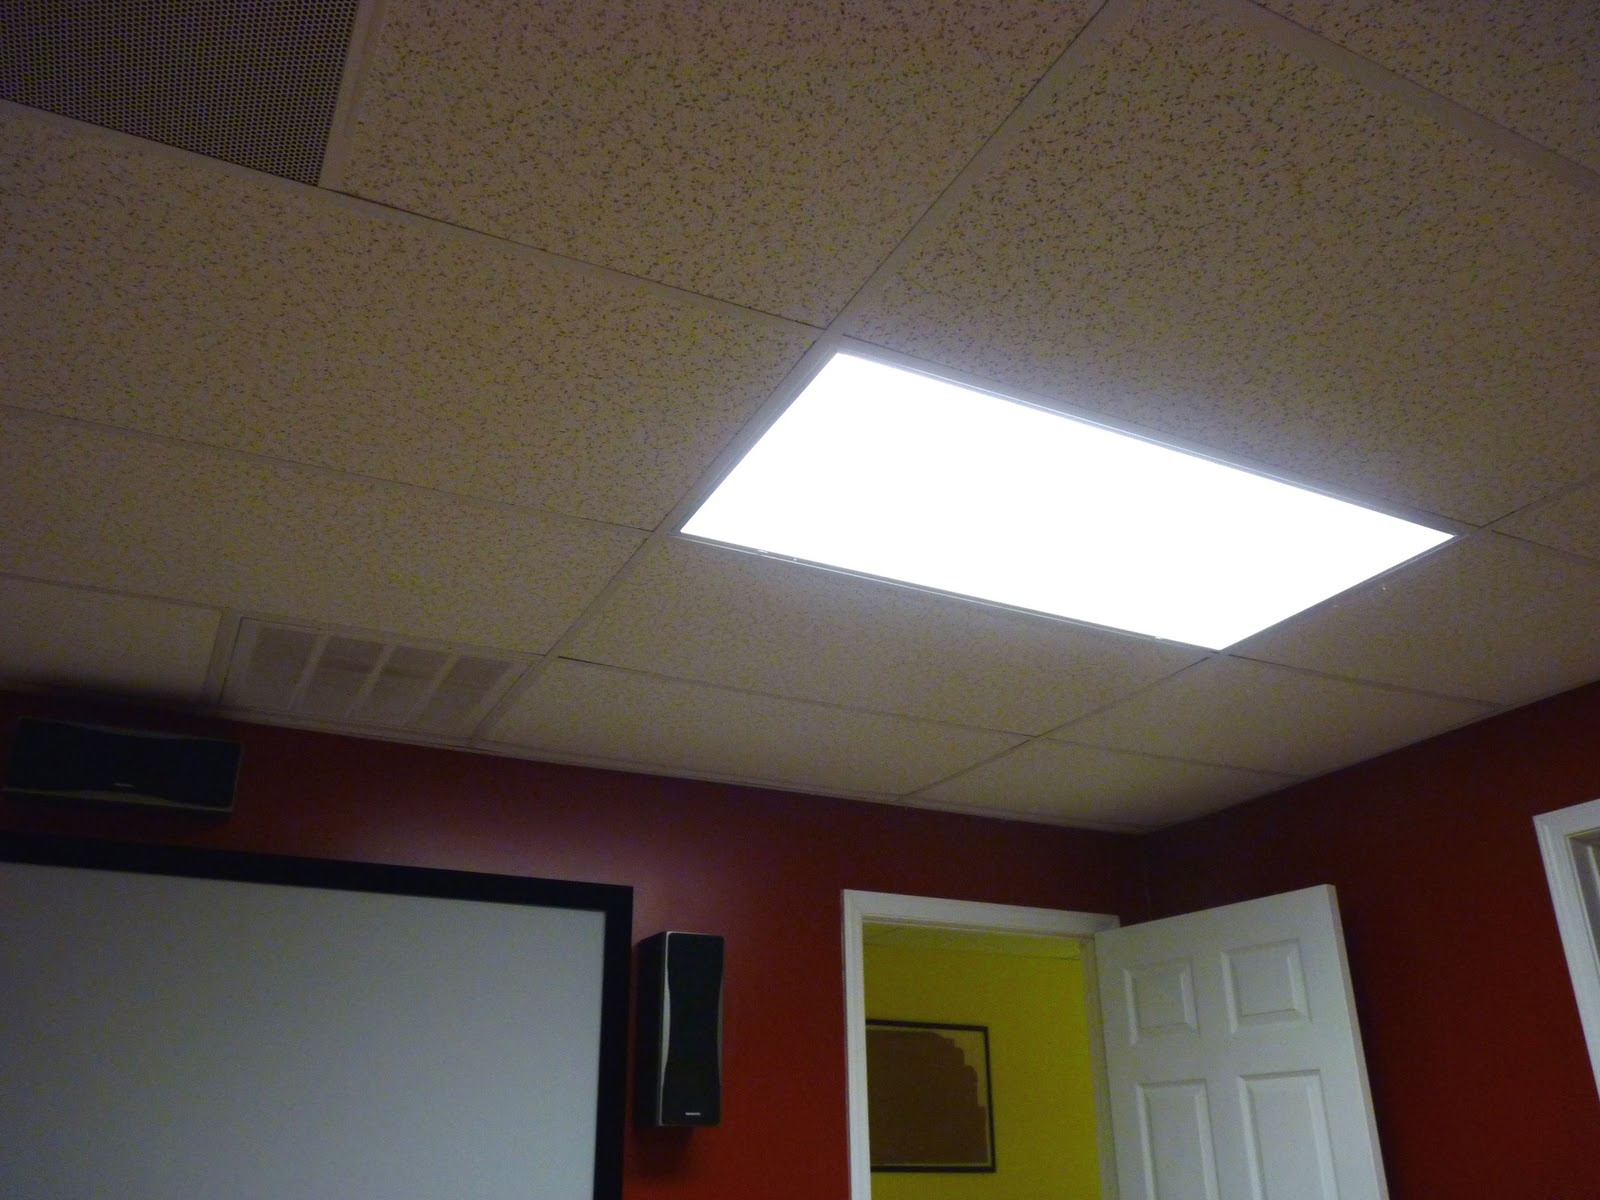 Fluorescent Lights For Drop Ceilingsuspended ceiling fluorescent lights 10 tips for installing